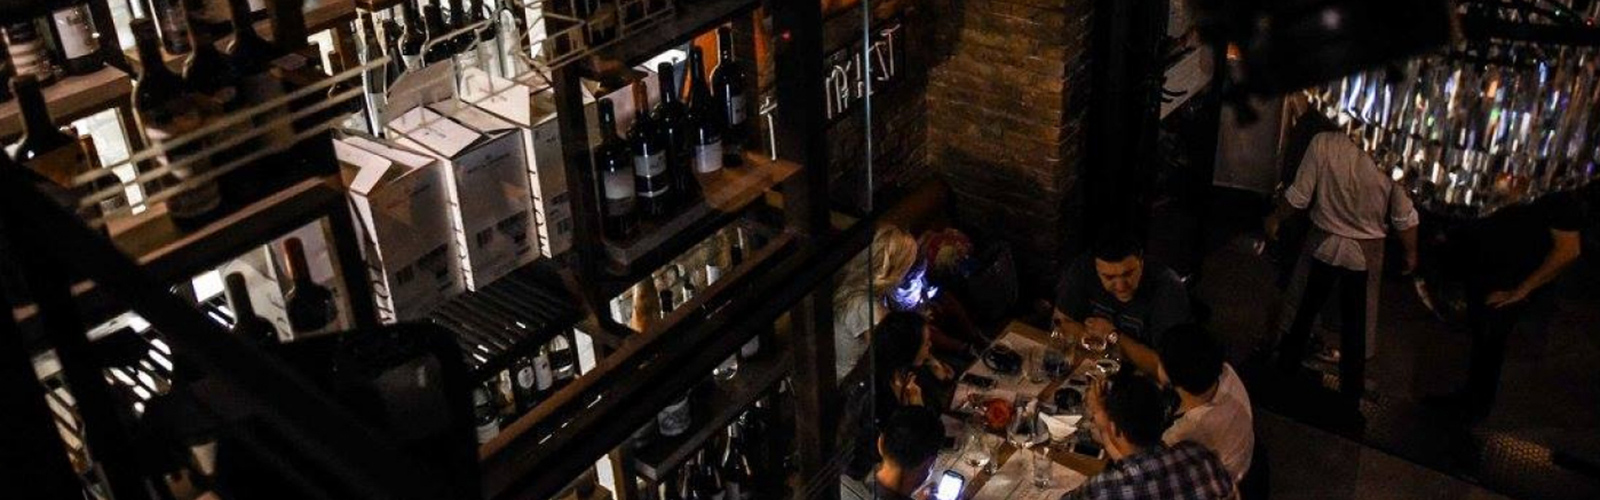 Concierge Belgrade | Restoran Cantina del Vino